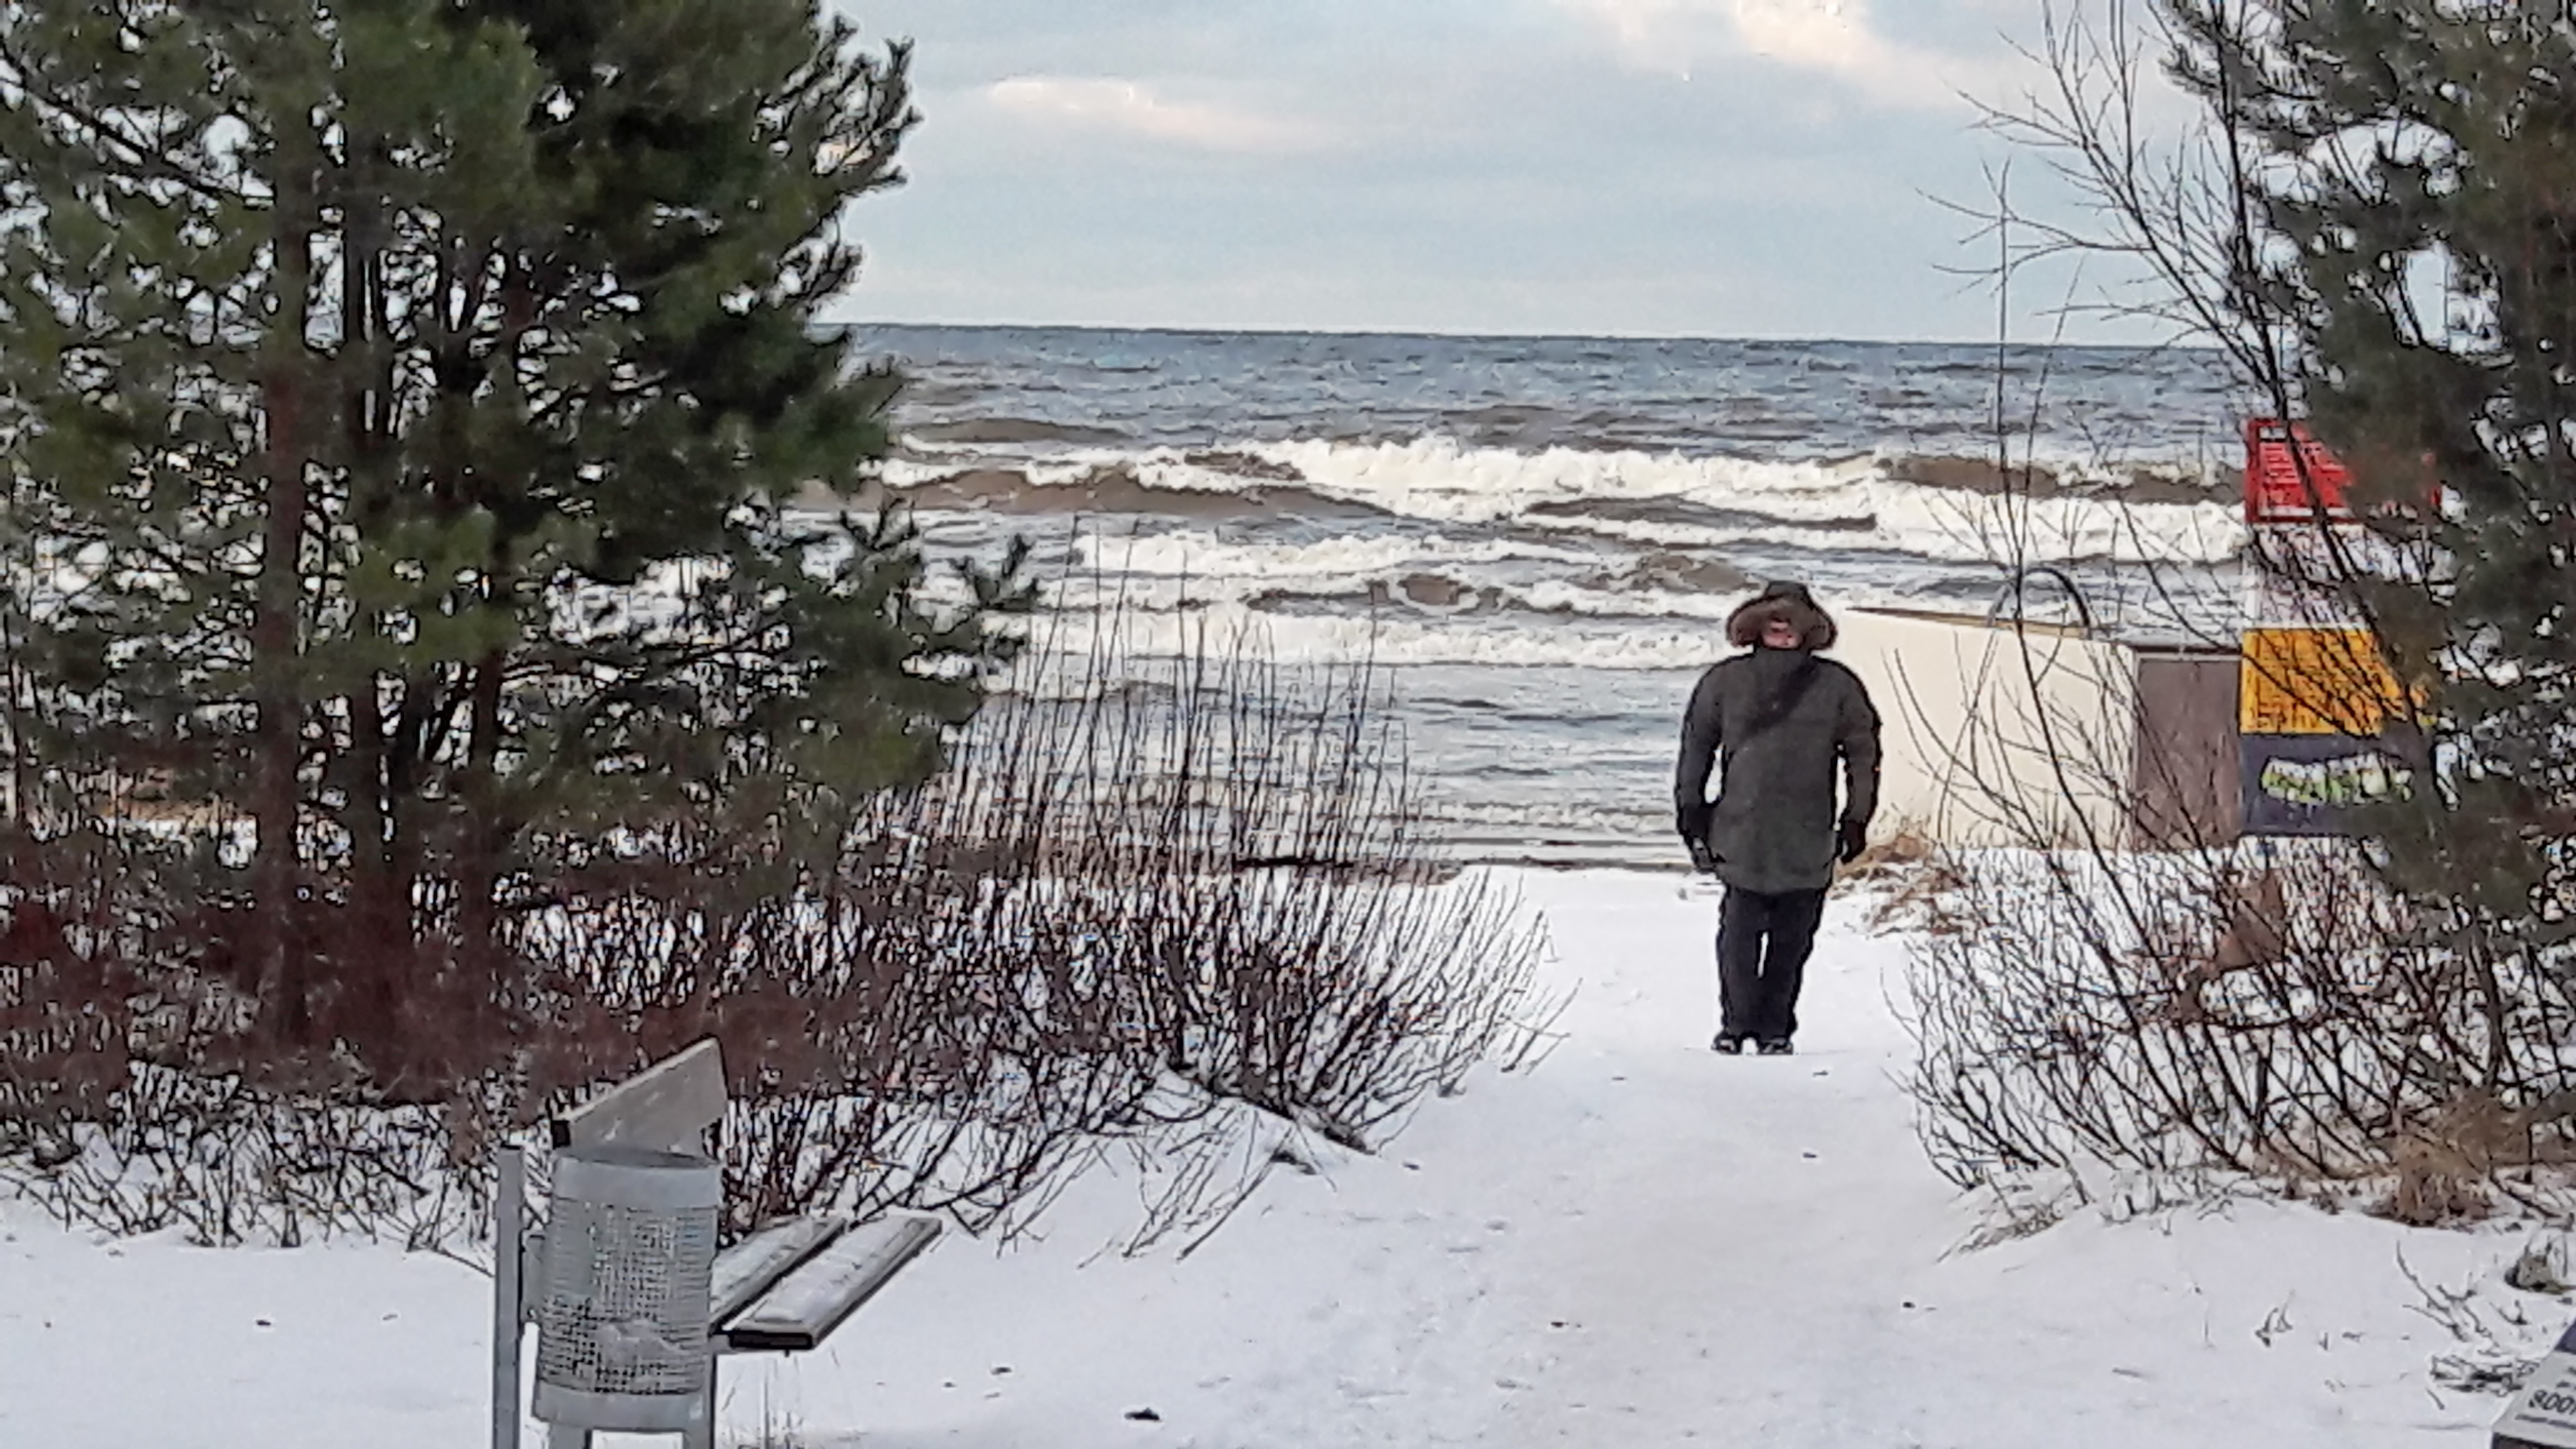 Me at a winter Jurmala Latvia beach.